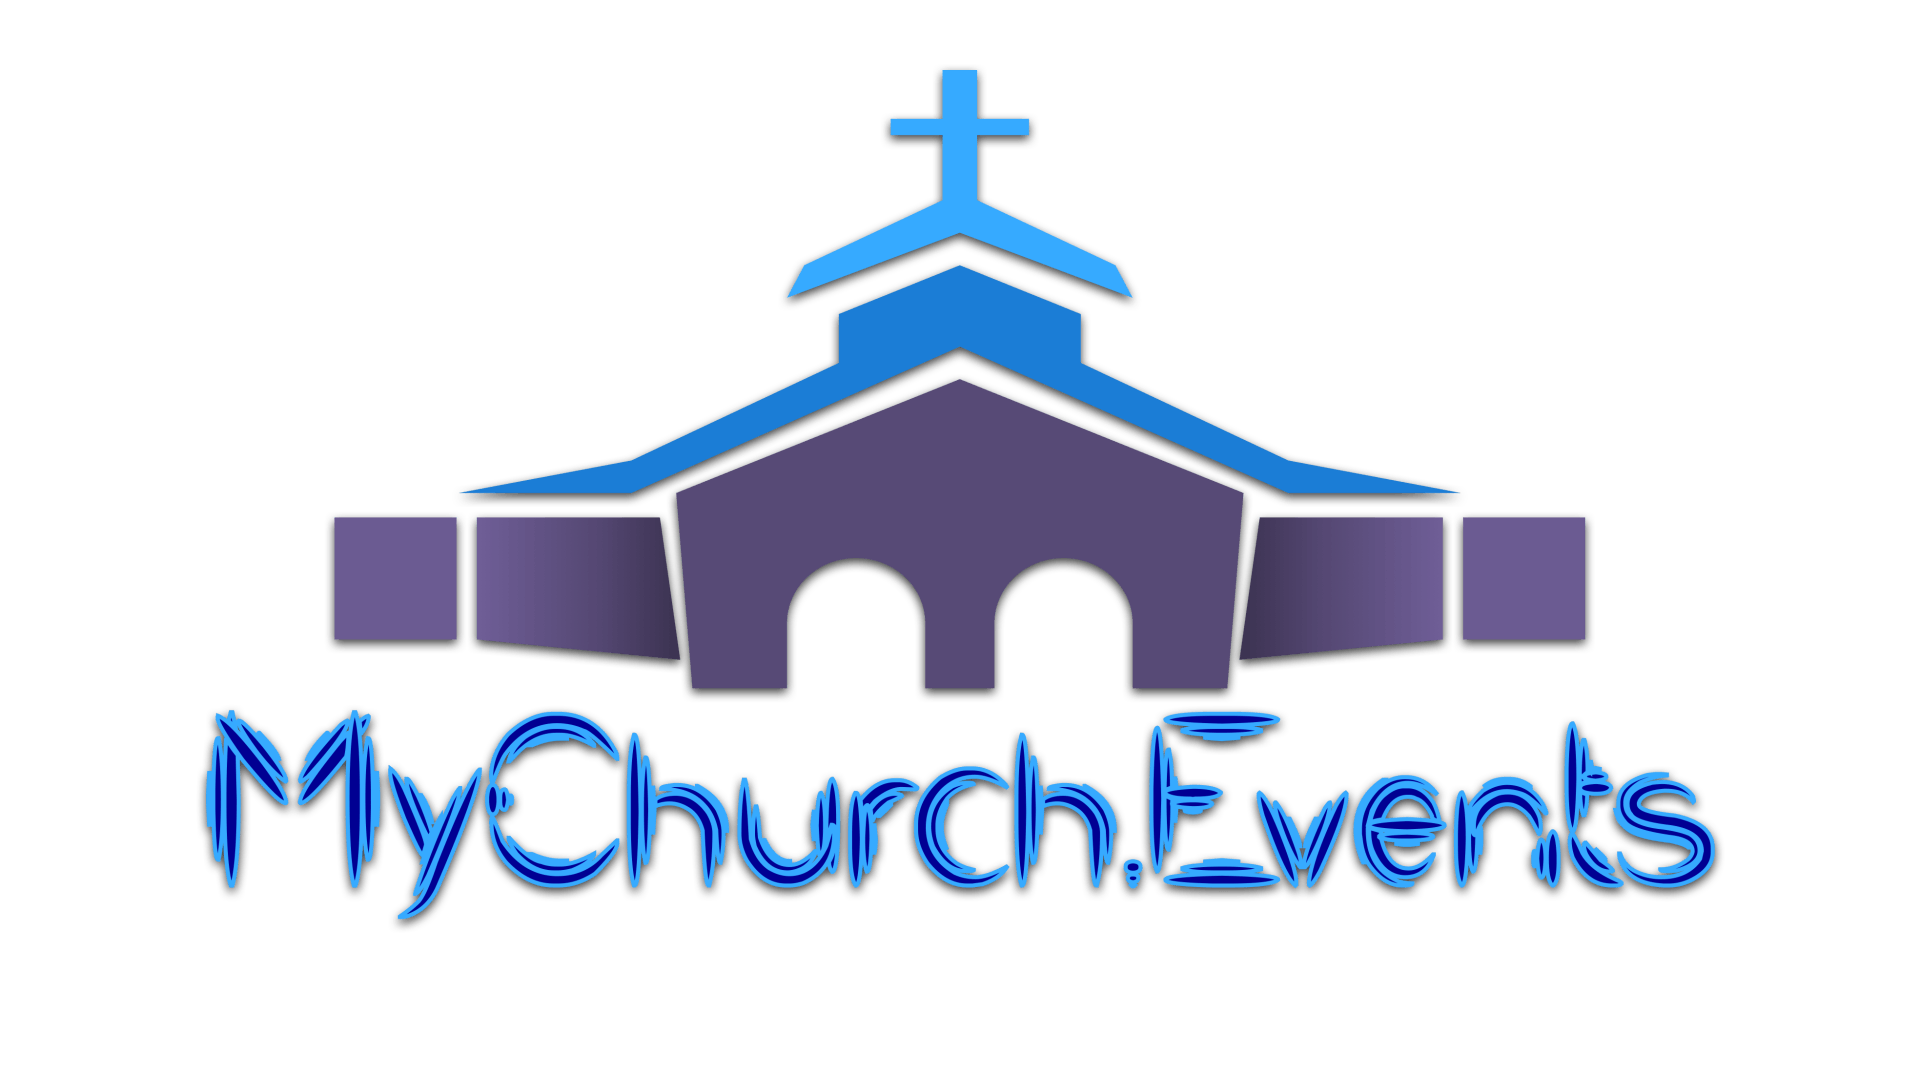 MyChurchEvents Logo